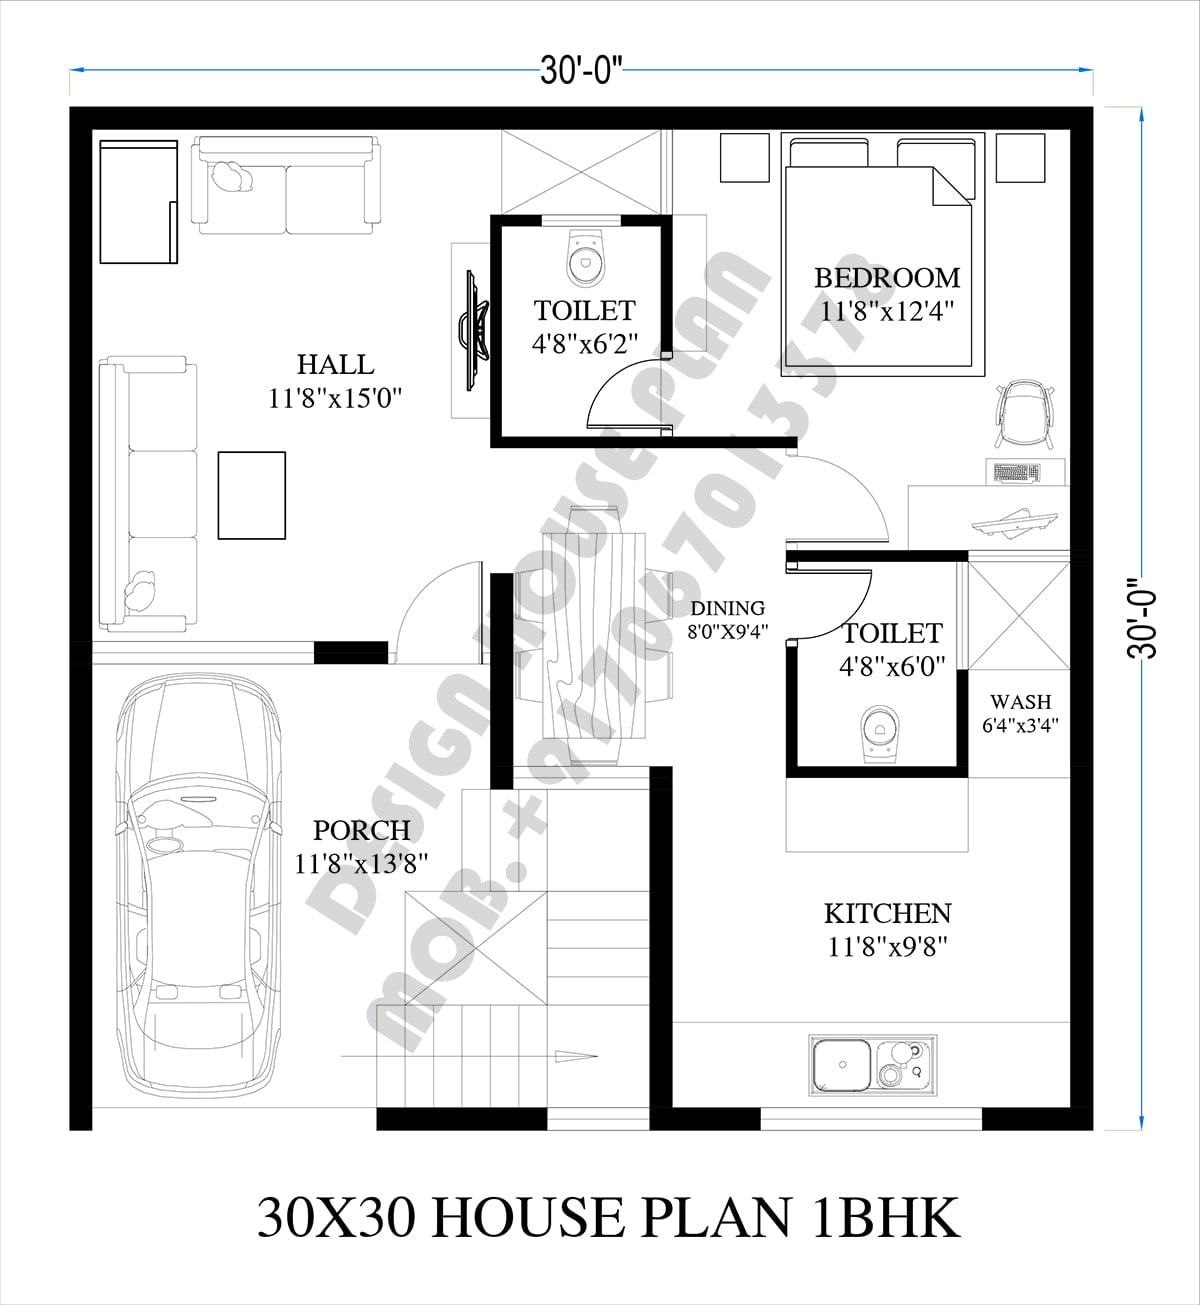 30 30 house plan east facing with vastu